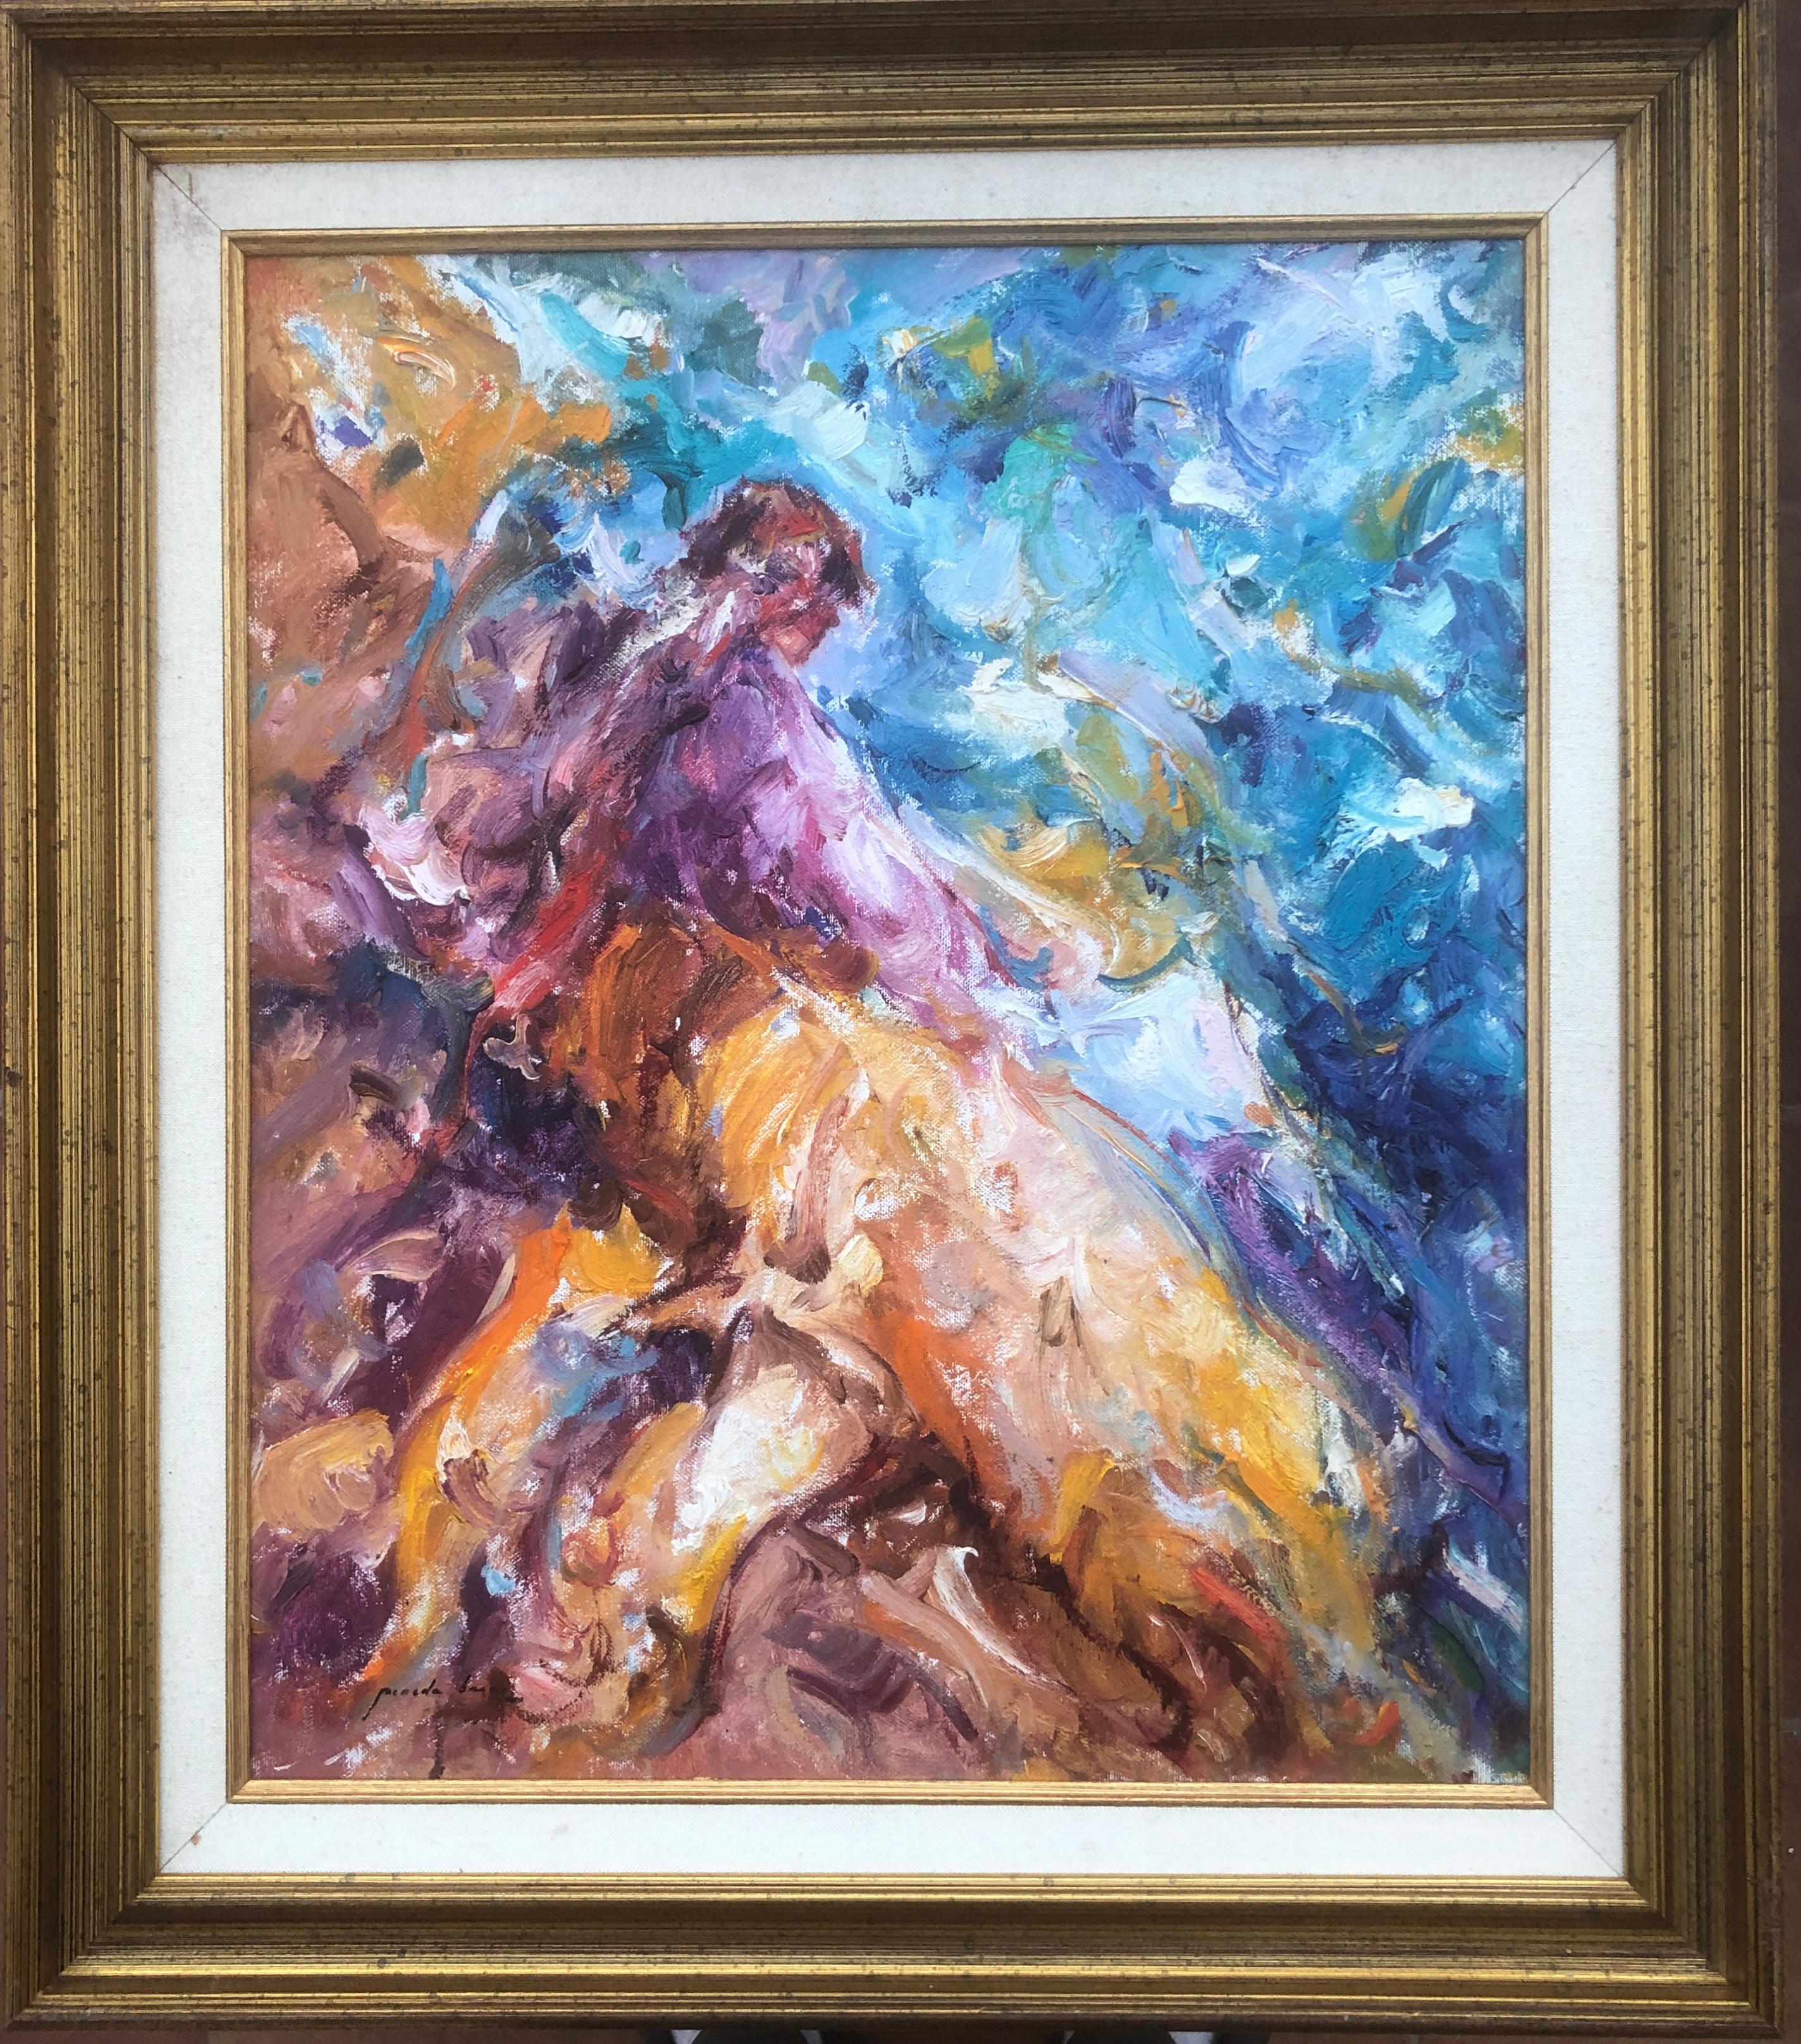 Woman by the sea huile sur toile peinture méditerranéenne  - Painting de Jose Antonio Pineda Bueno